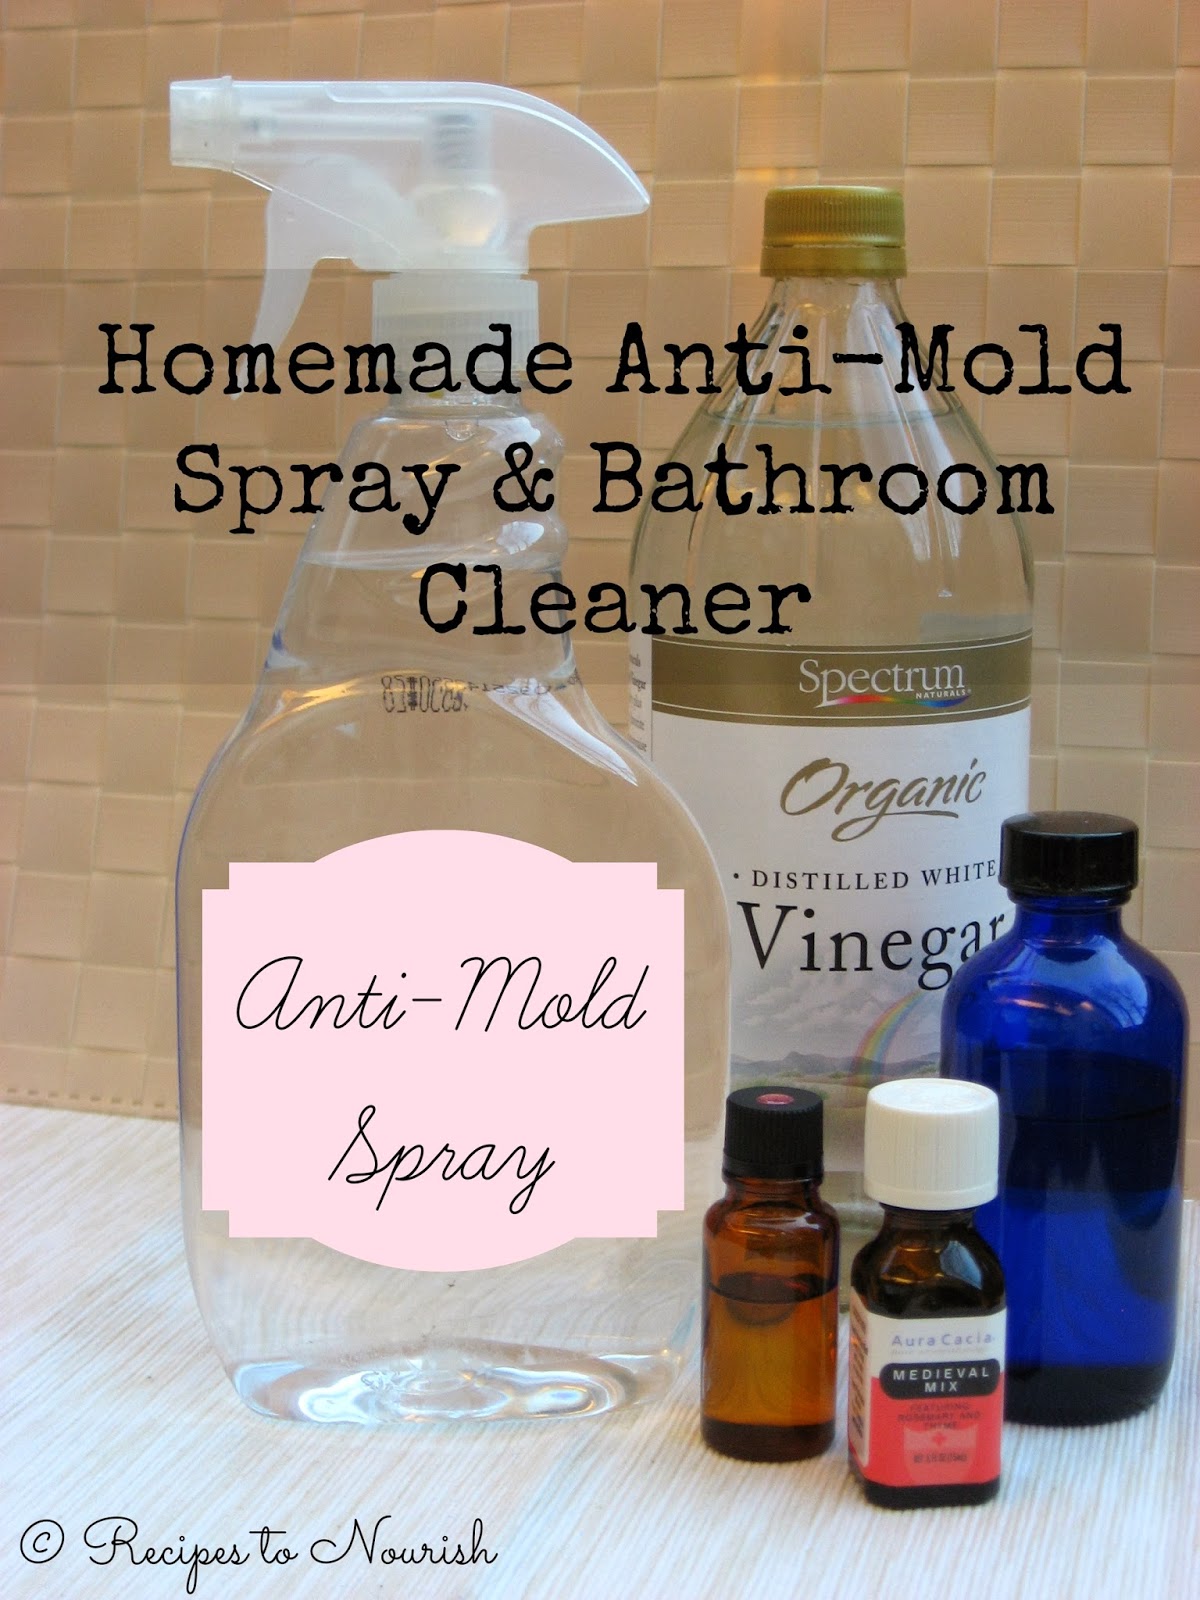 Recipes to Nourish: Homemade Anti-Mold Spray & Bathroom Cleaner + 10 ...